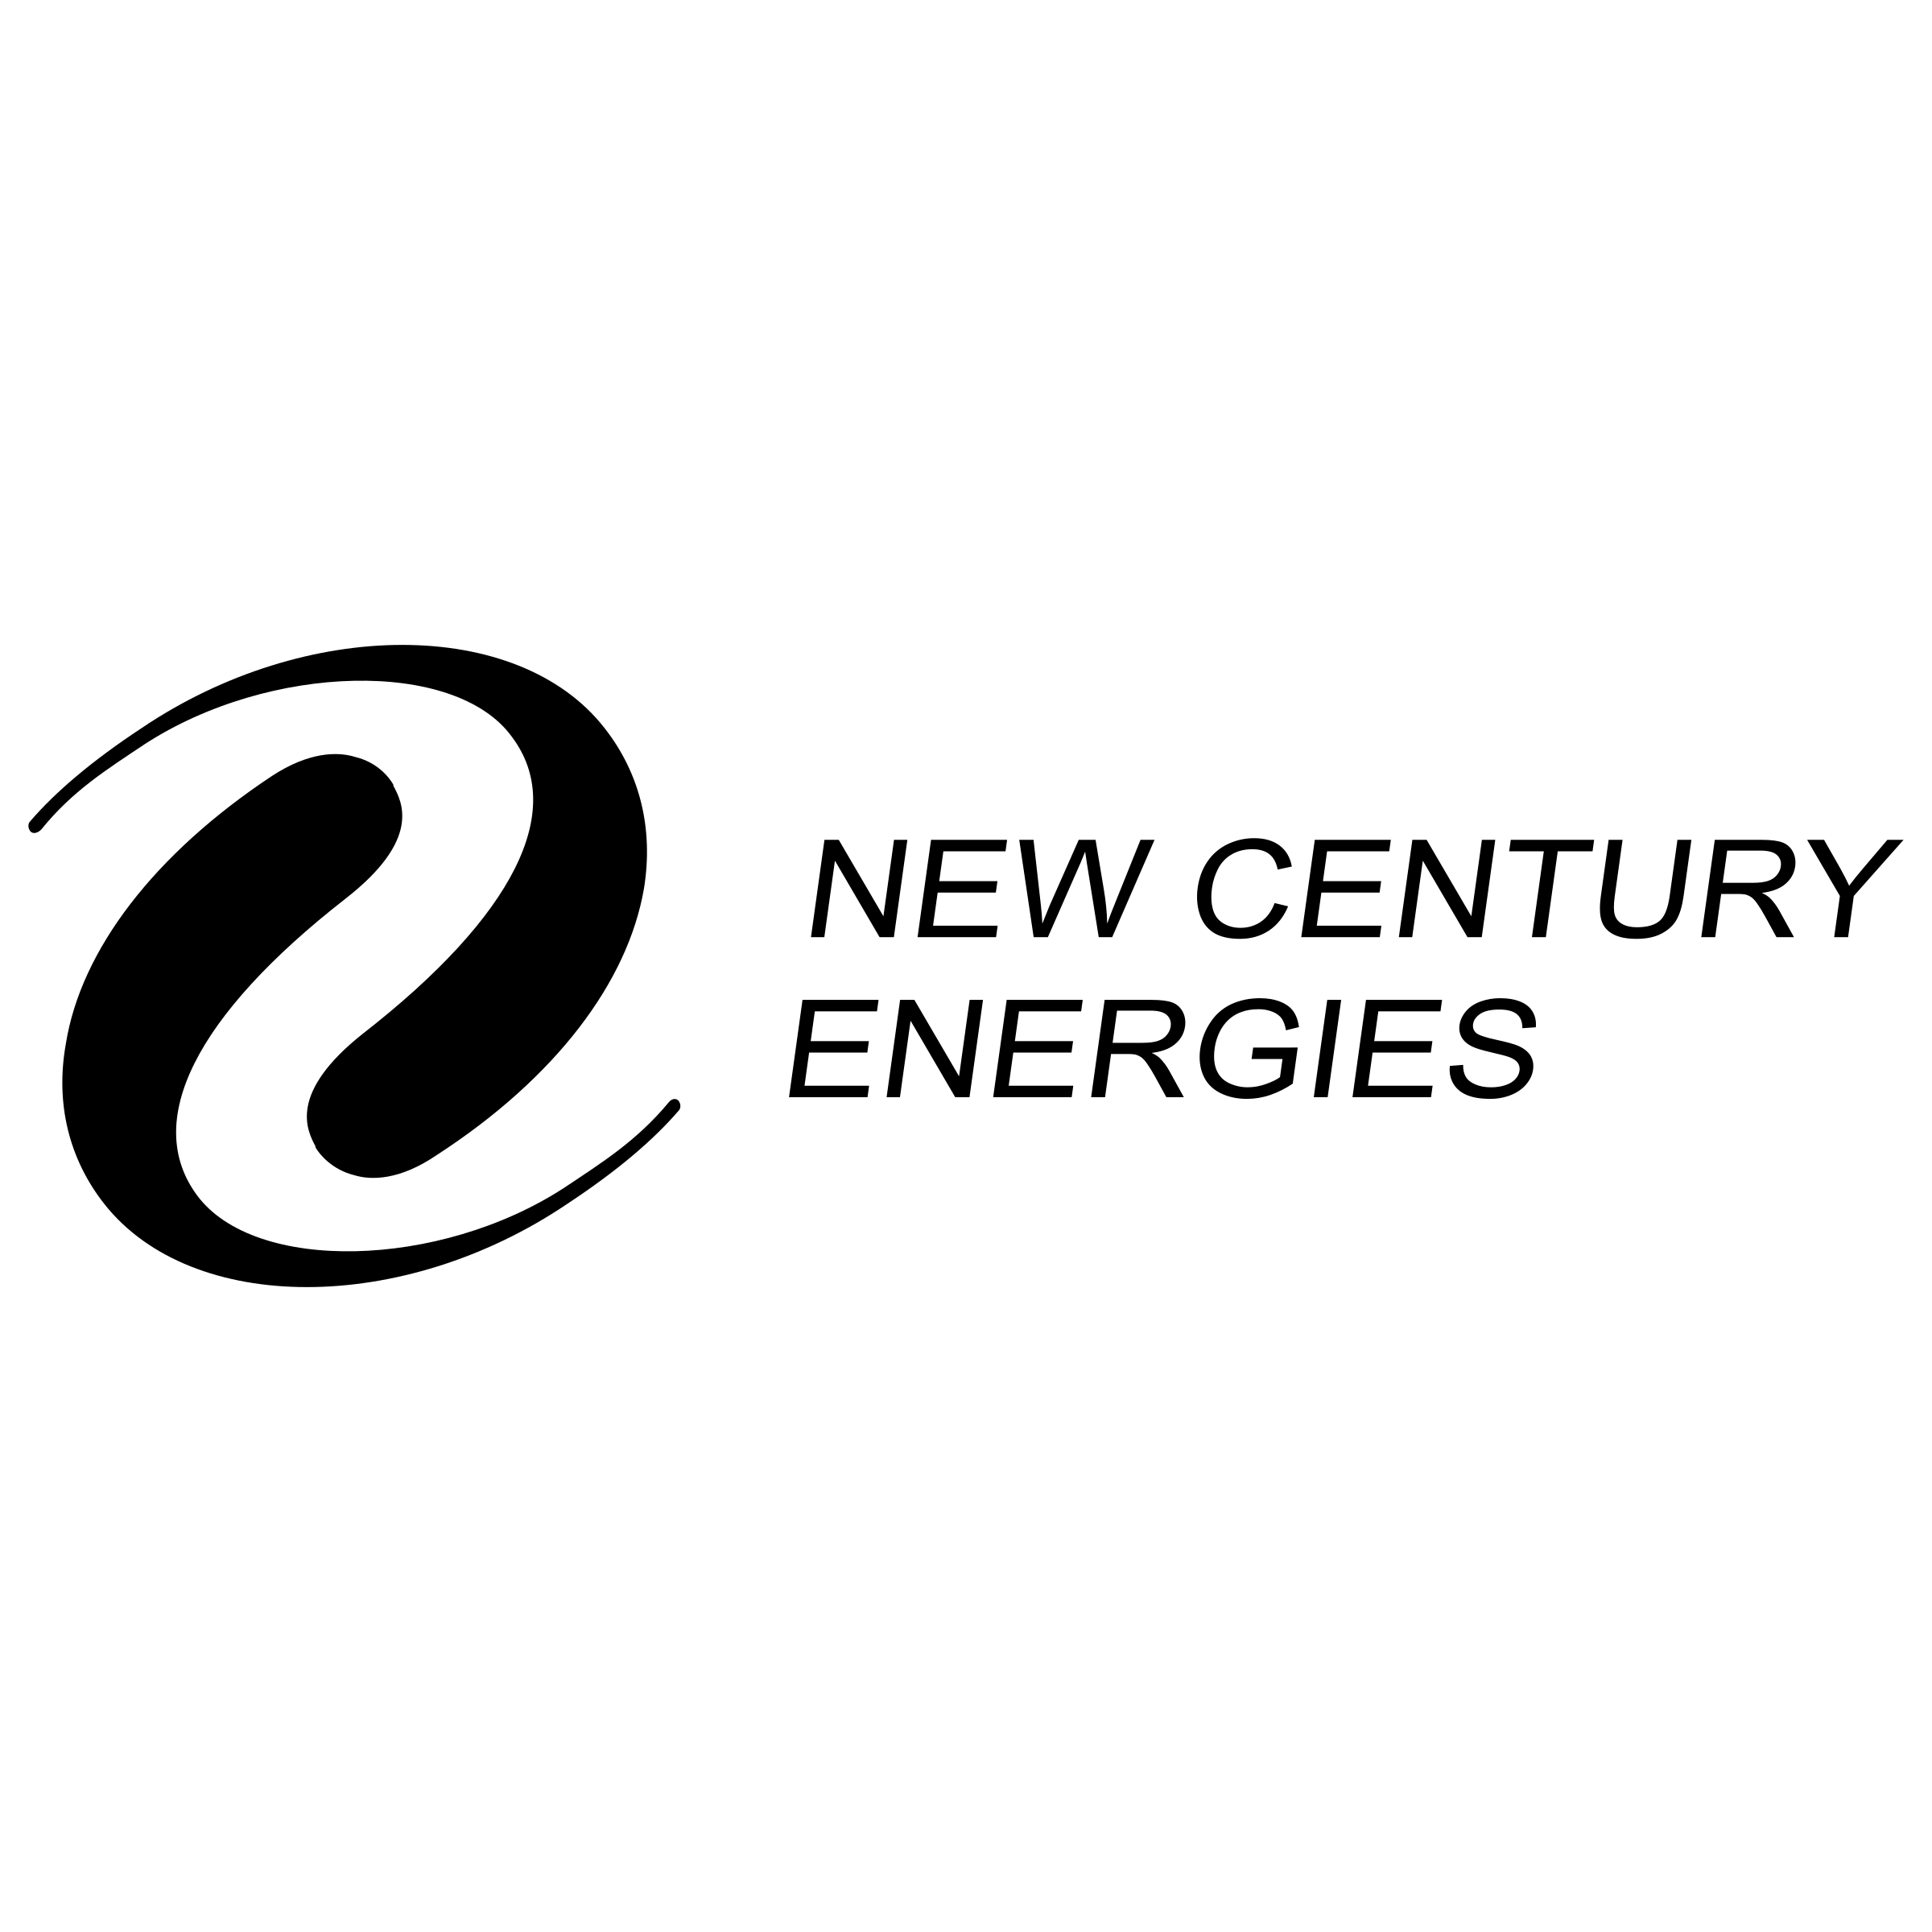 New Century Logo - New Century Energies Logo PNG Transparent & SVG Vector